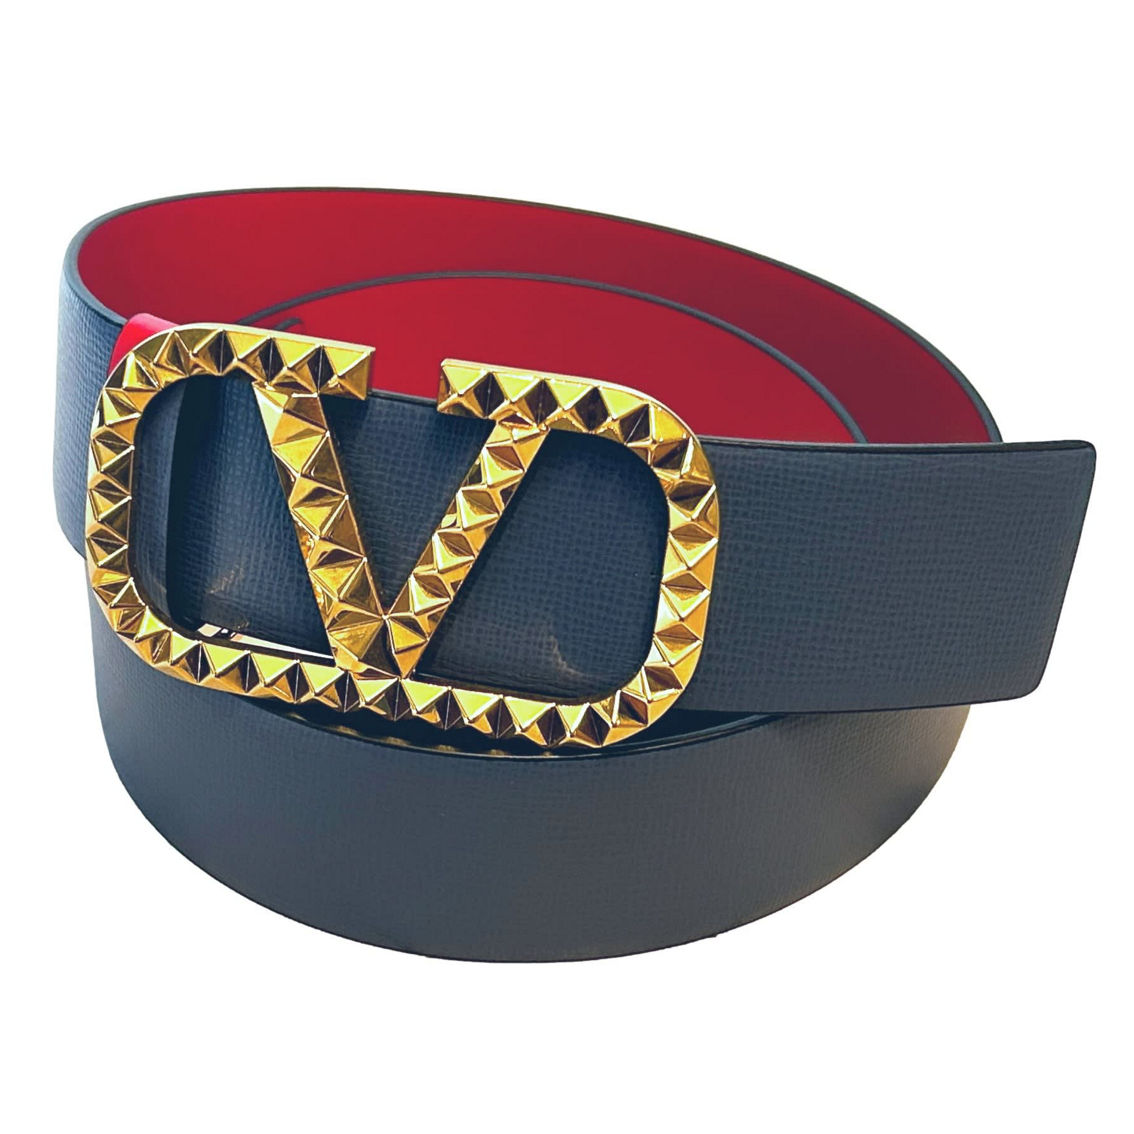 Valentino Garavani VLogo Stud Reversible Belt Size 95 Gray Red Leather (New) - Image 3 of 5